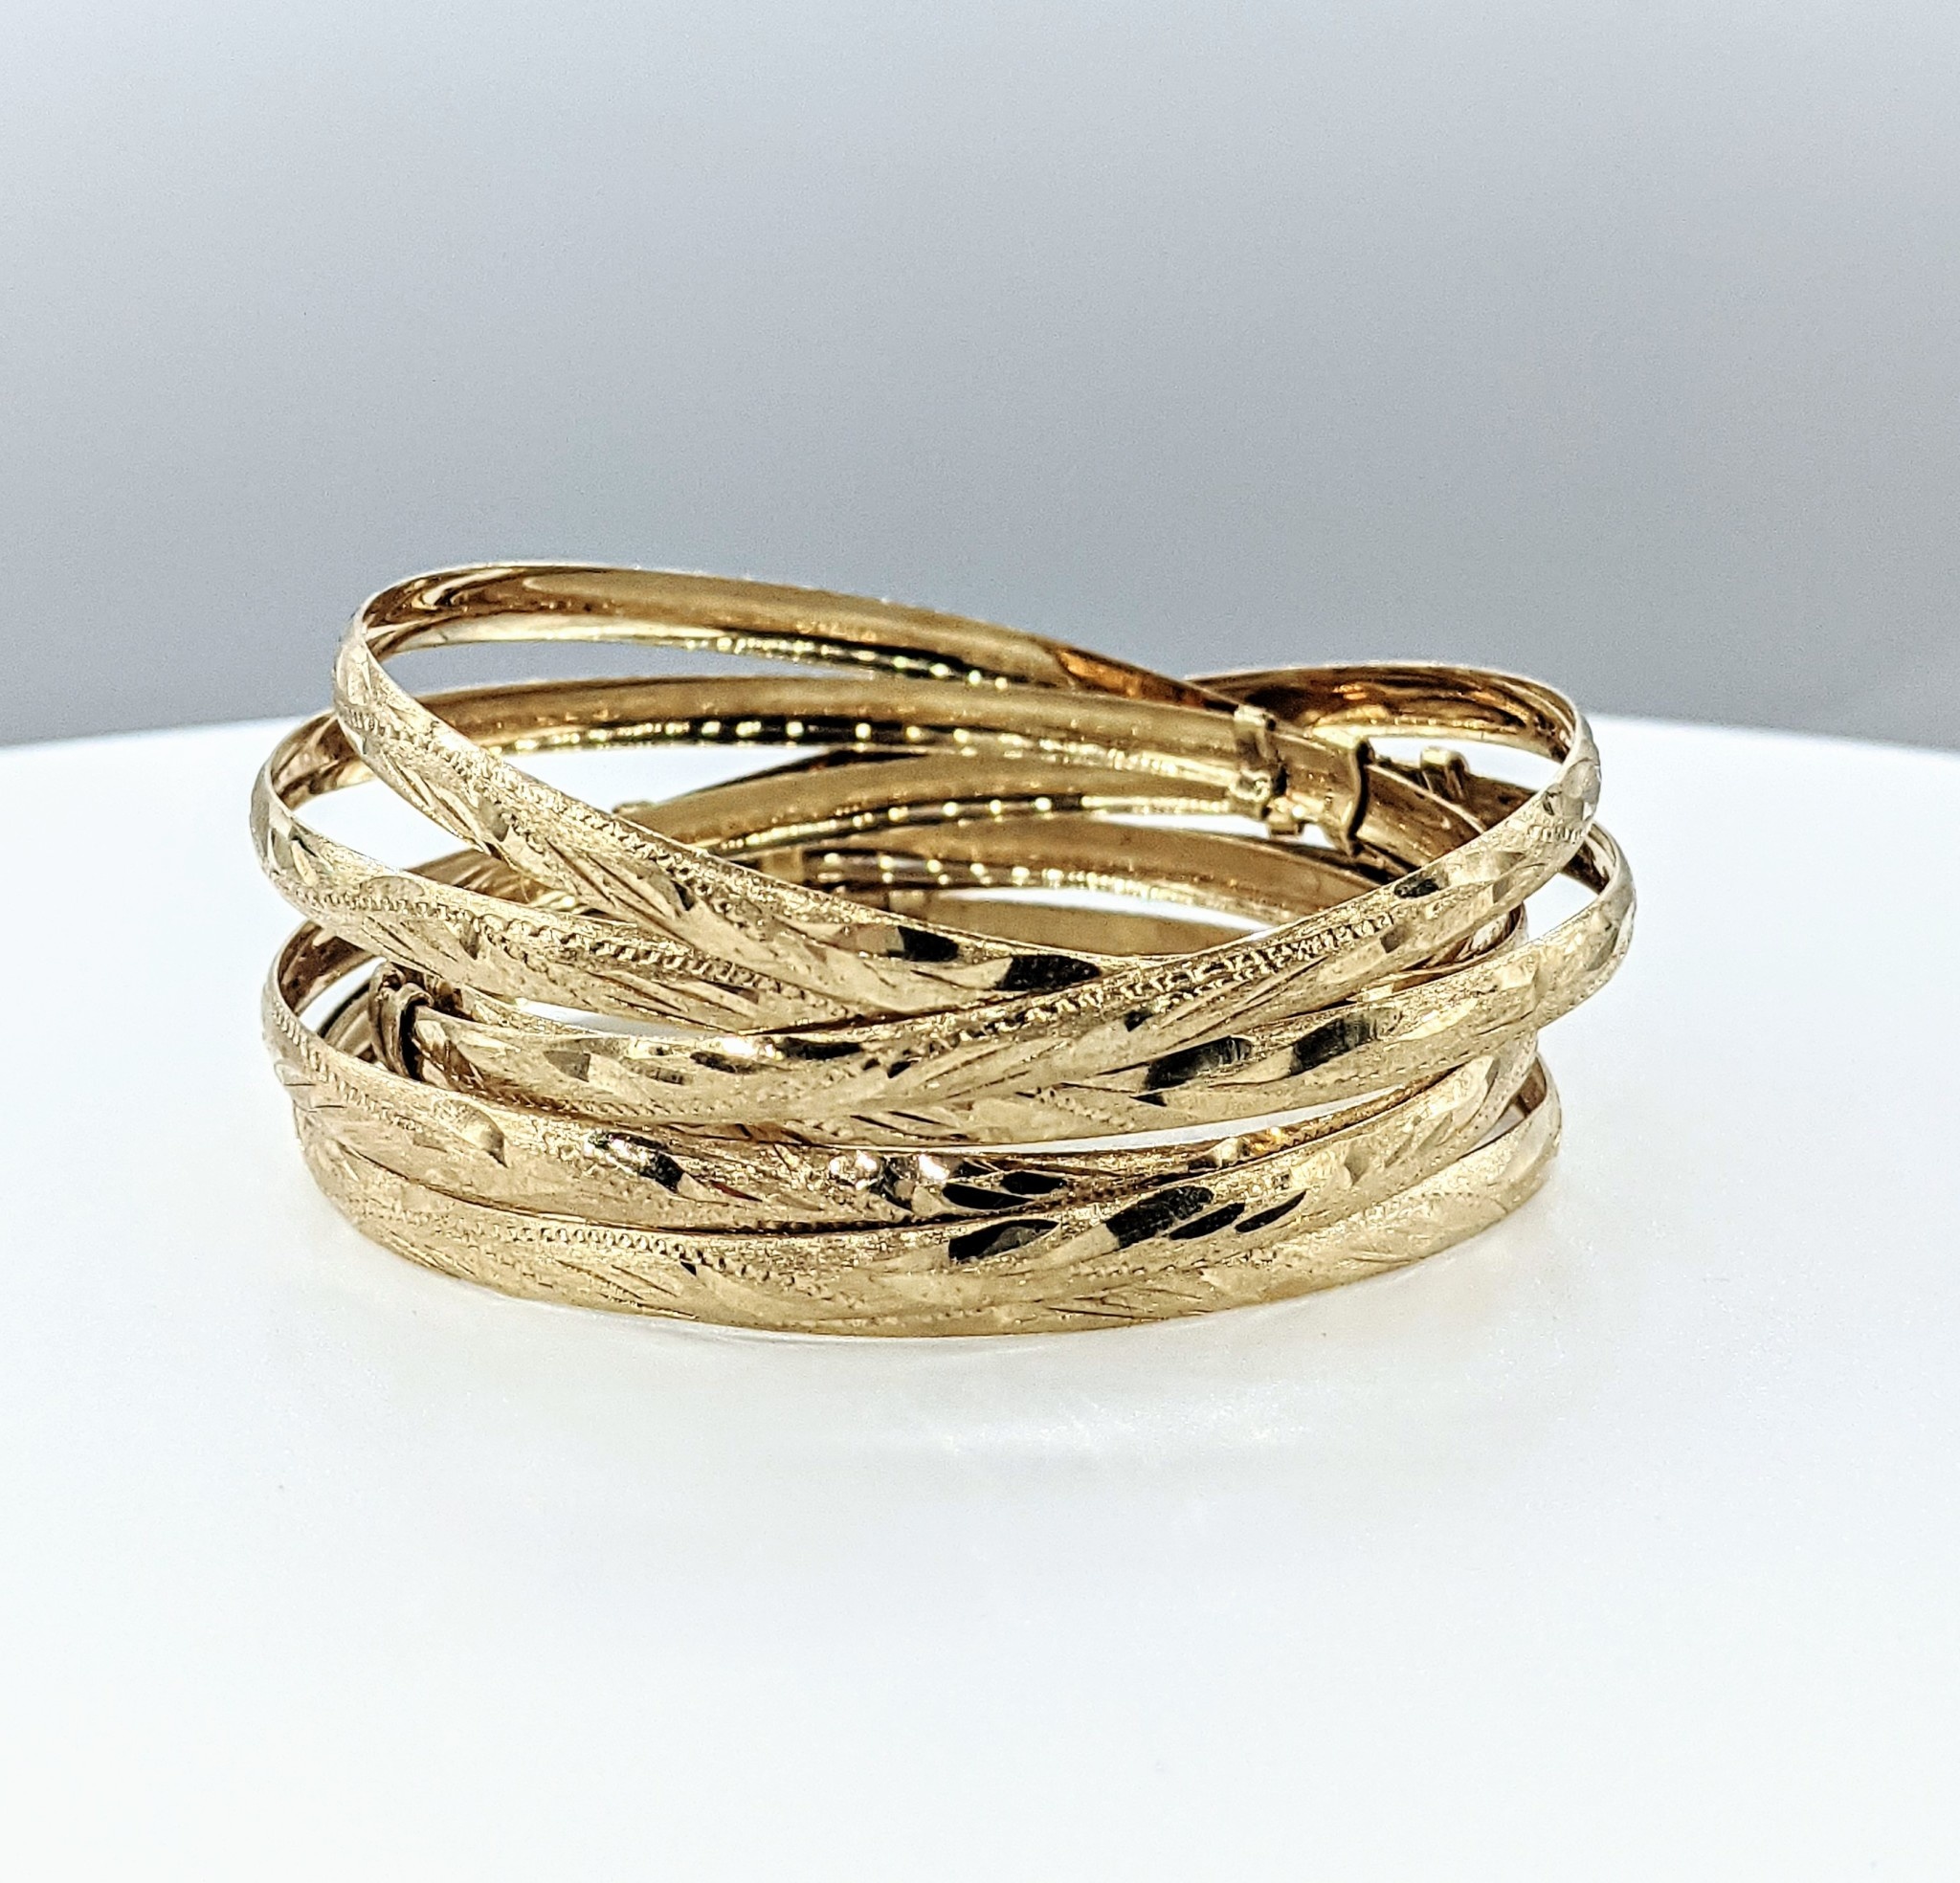 Etched Gold Layered Semanario Bangles Bracelets Oro Laminado 7 4mm | eBay